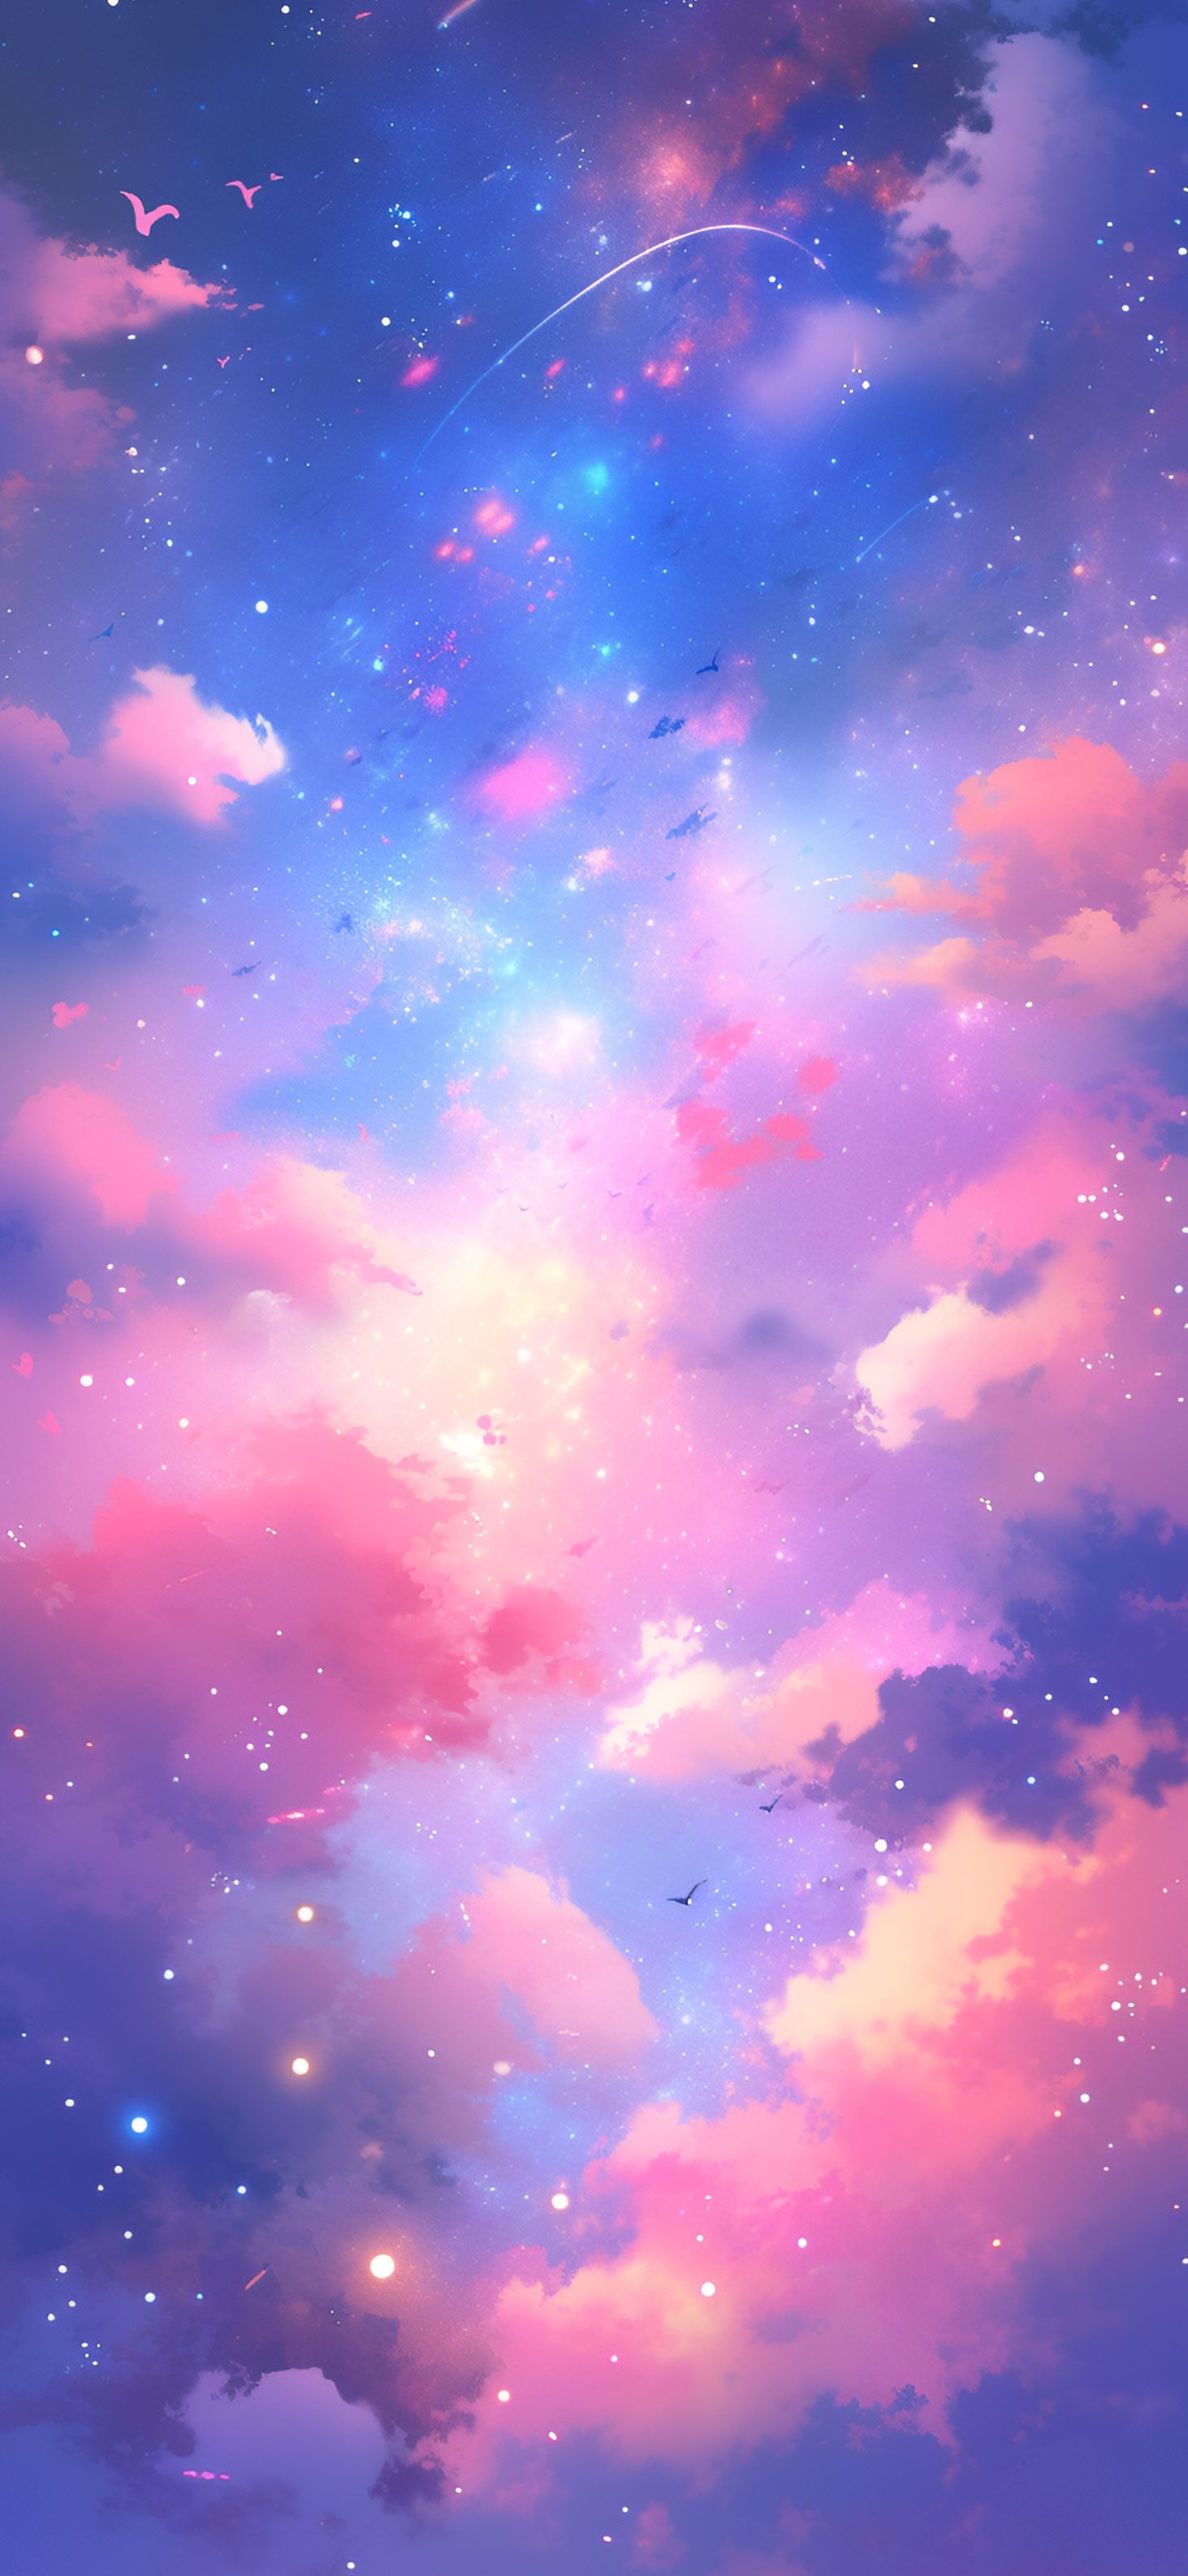 Galaxy Stars & Pink Clouds Wallpaper